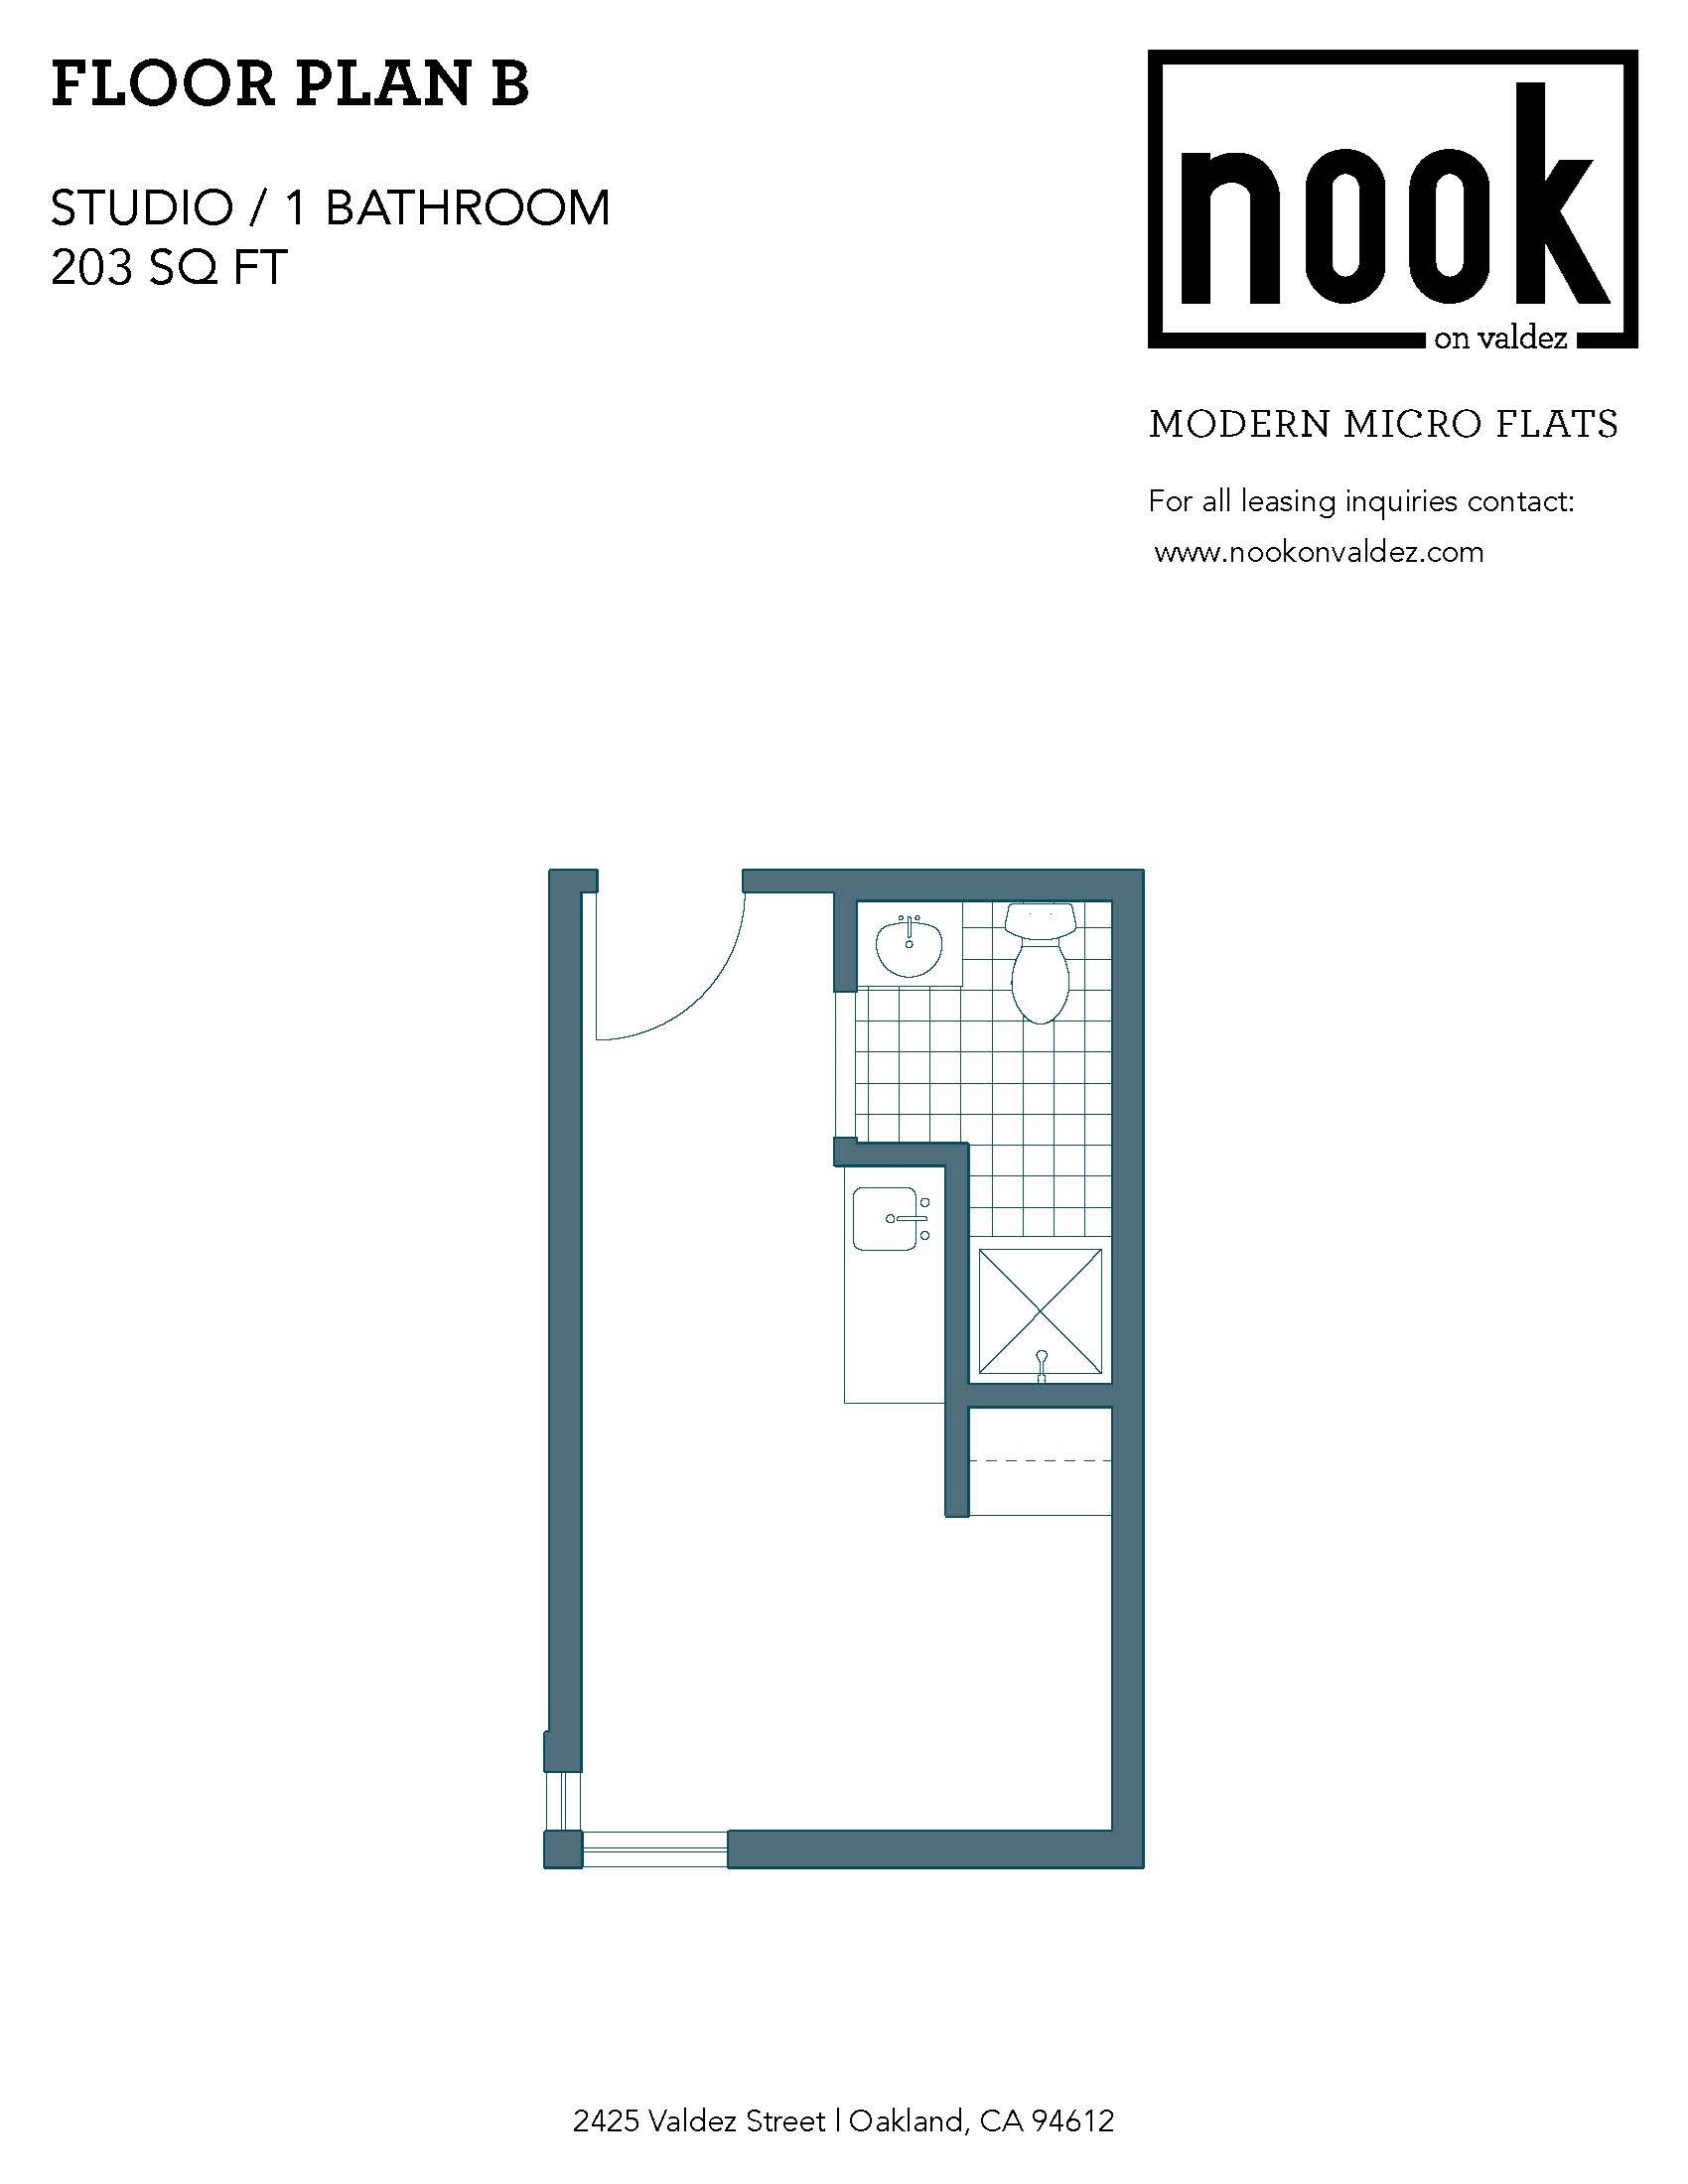 nook room floor plans_Page_02.jpg